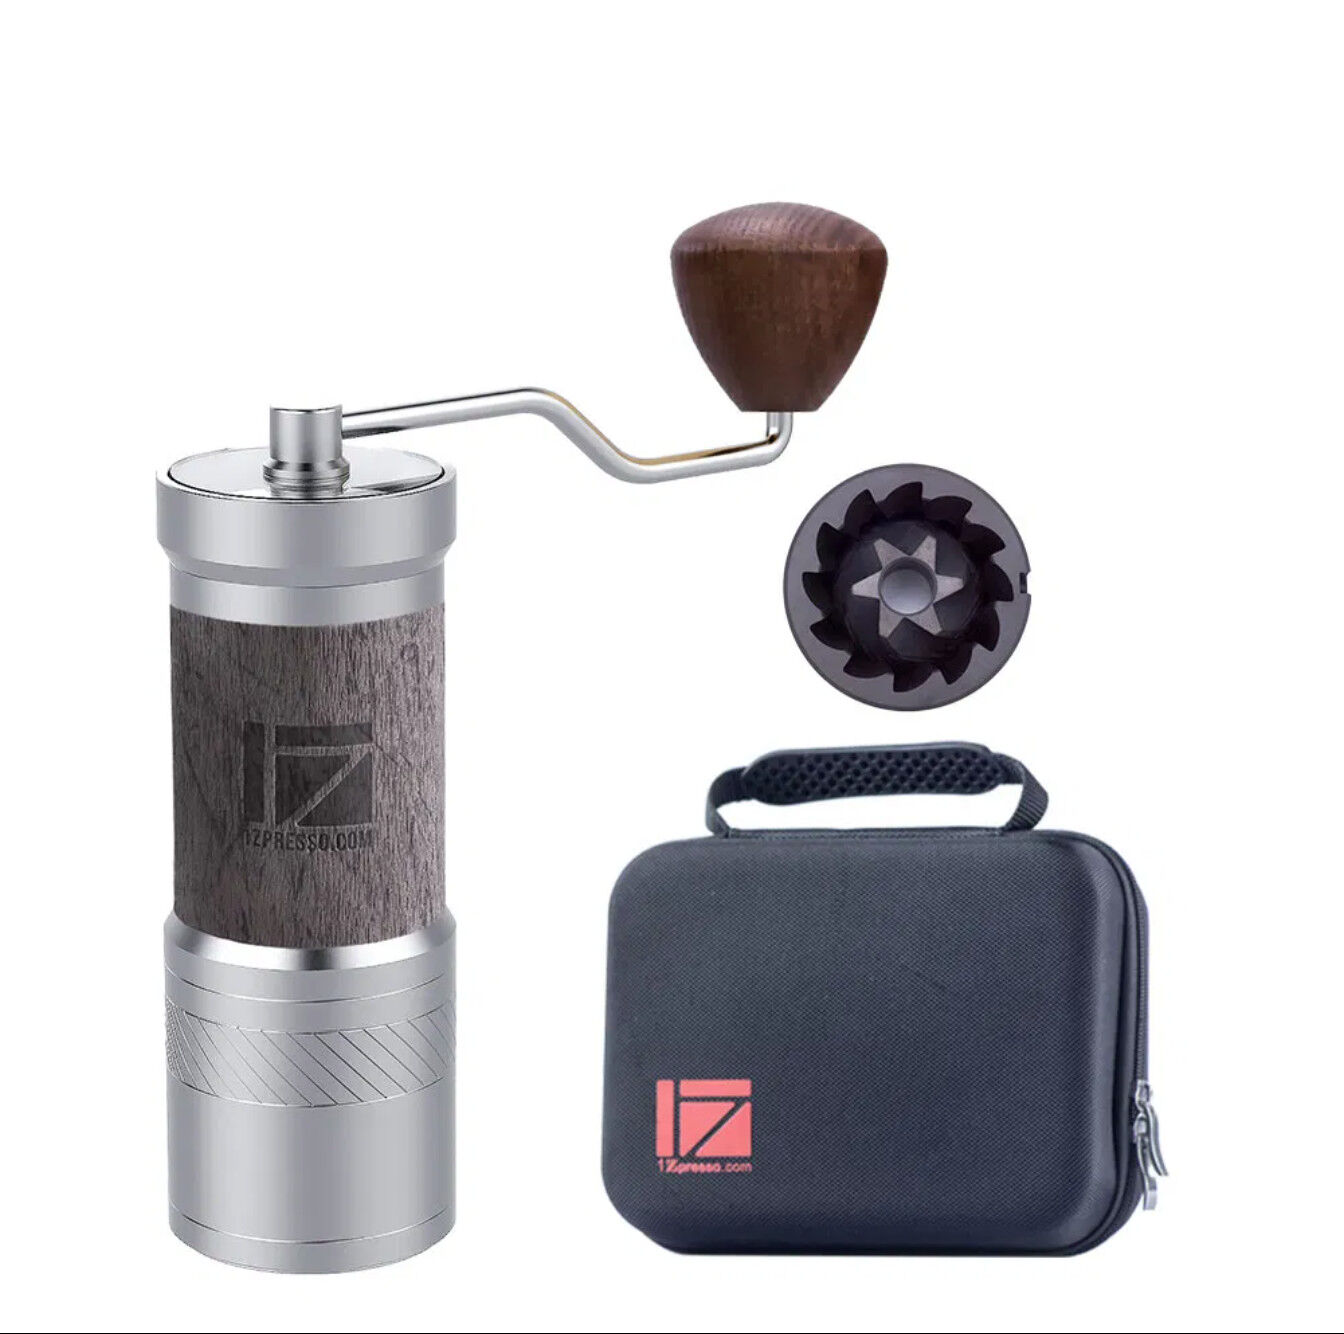 Kaffebox 1Zpresso JE-plus Coffee Grinder